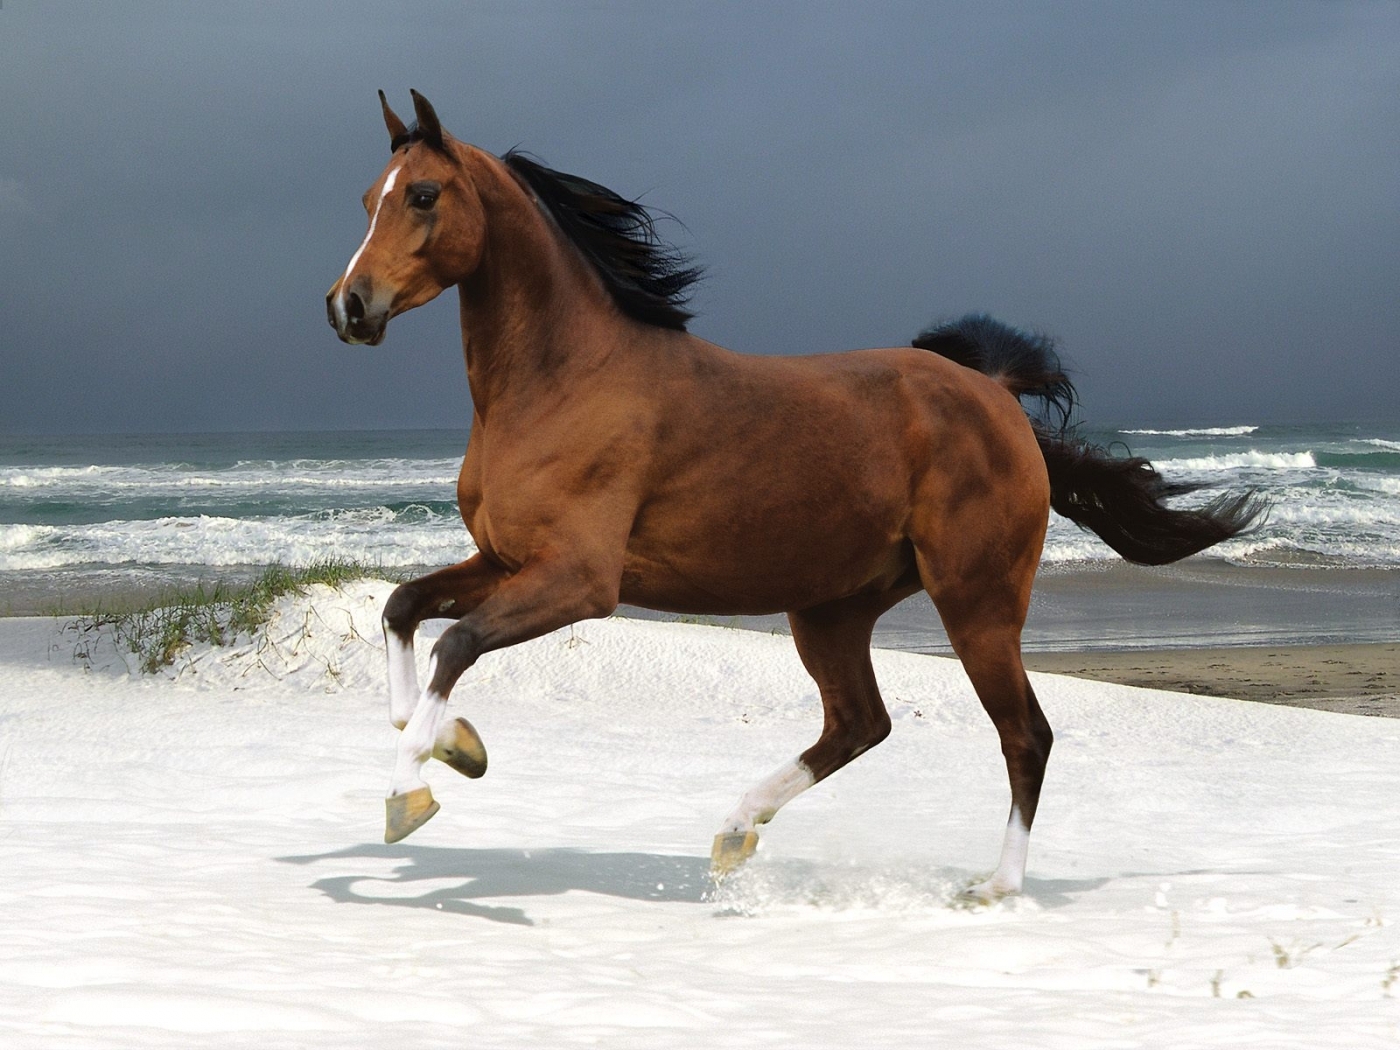 horses, animals Image for desktop